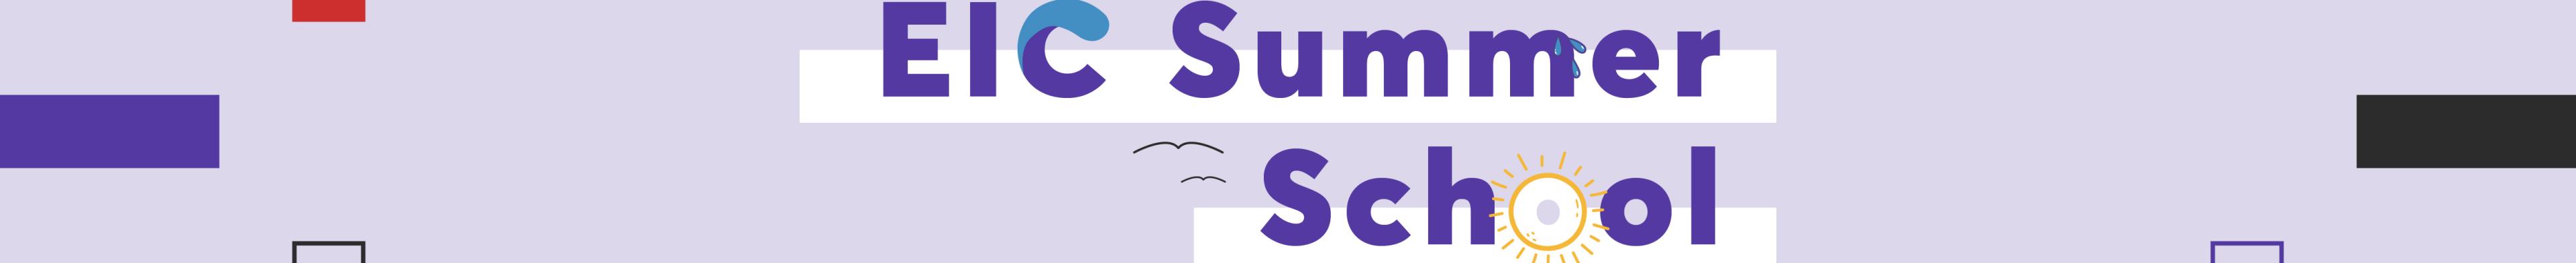 eic_summerschool_community_banner.jpg